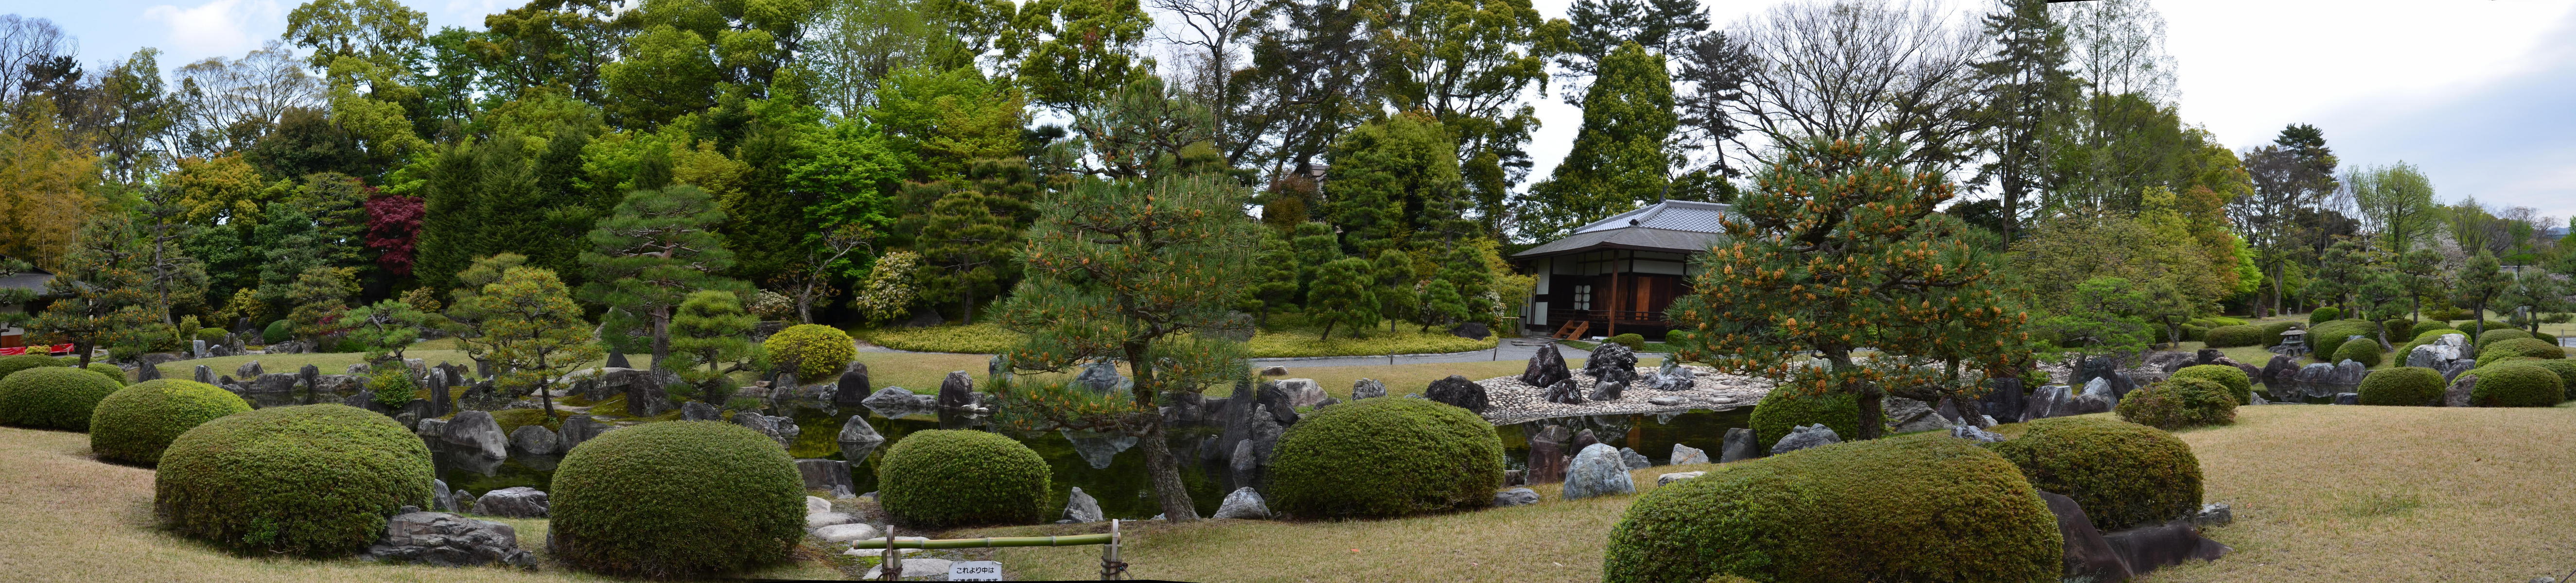 Nijo castle garden - Kyoto - Japan.jpg